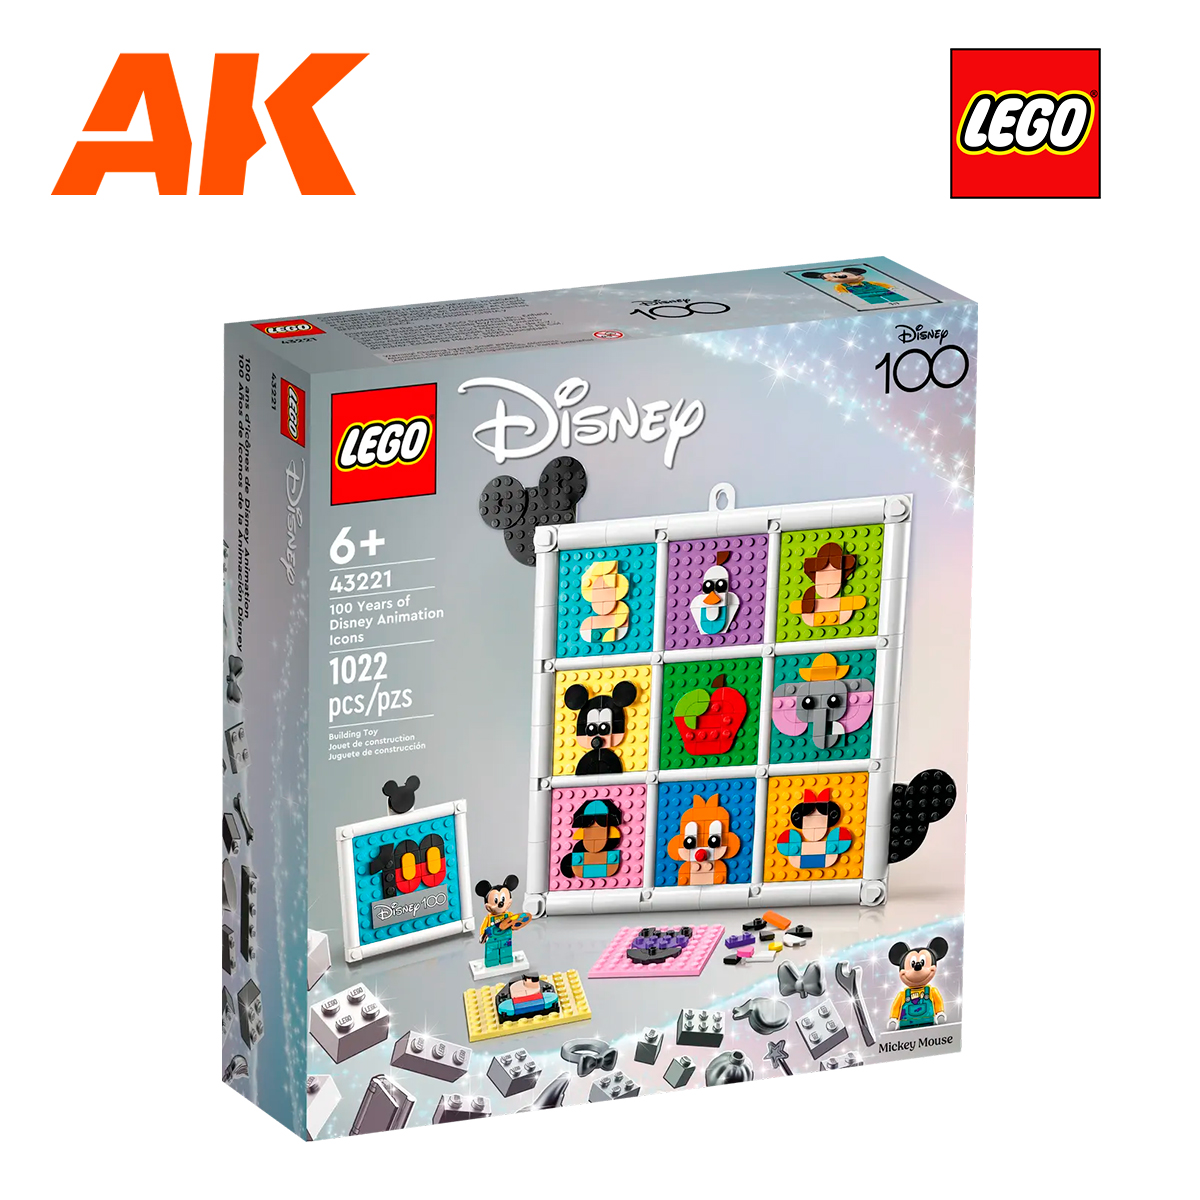 https://ak-interactive.com/wp-content/uploads/2023/05/LEGO43221.jpg